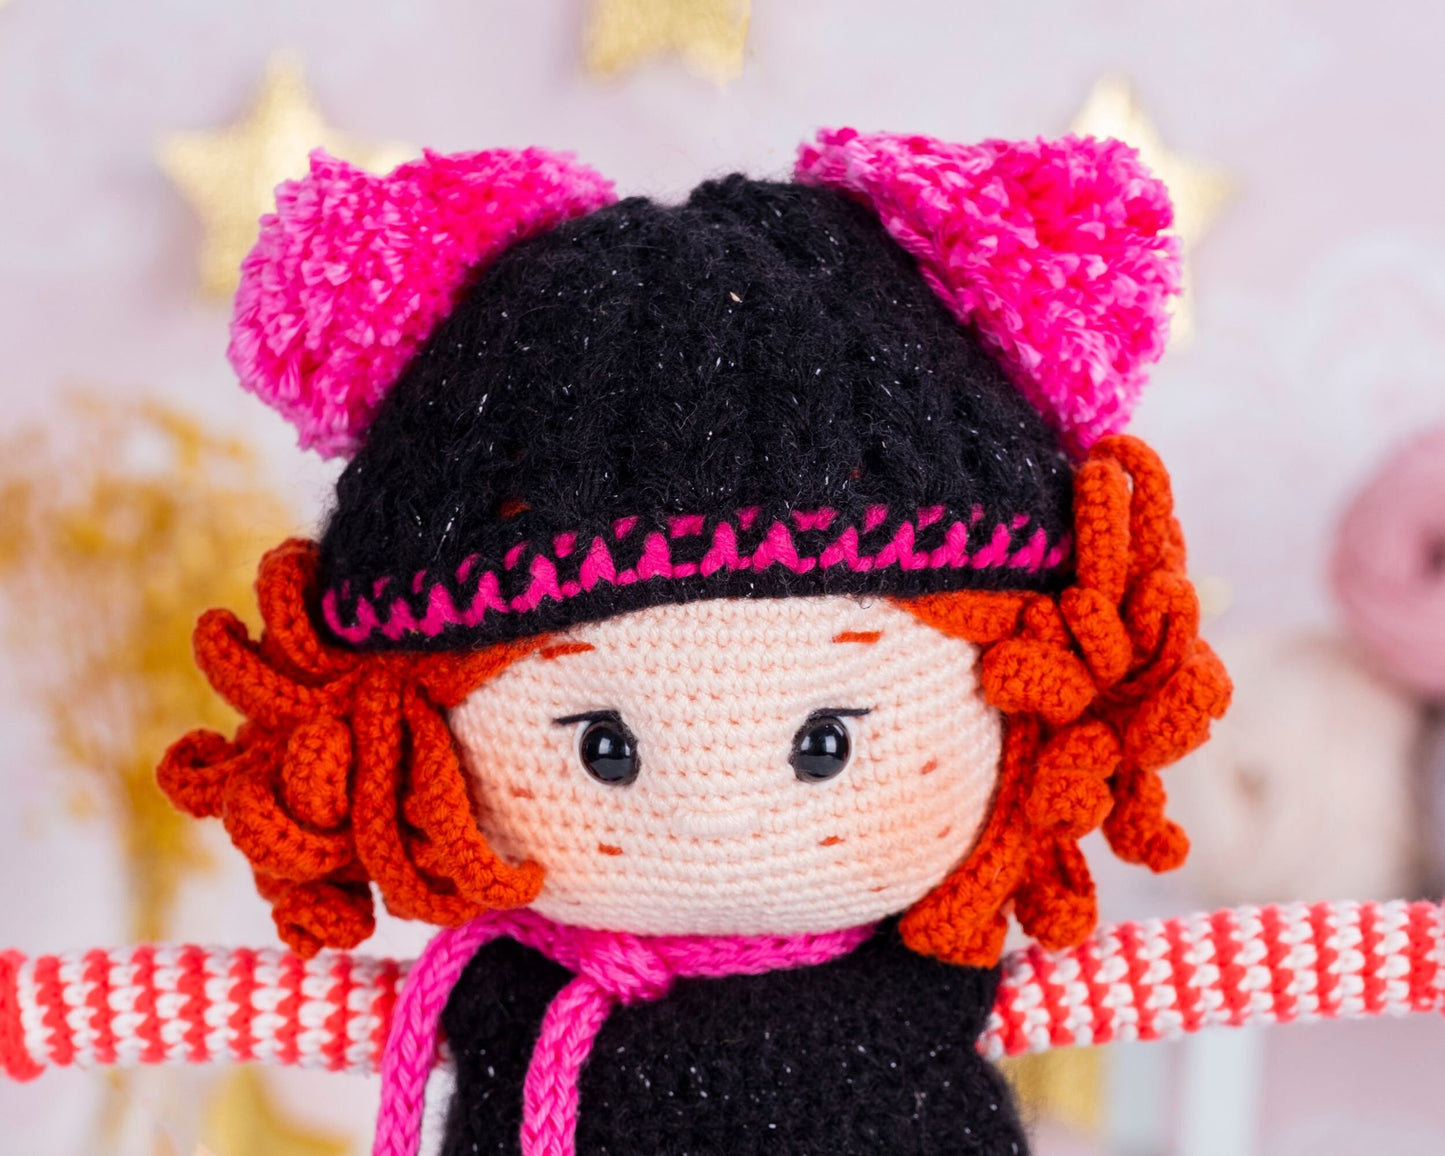 Crochet Doll, Amigurumi Doll, Christmas Amigurumi, Knitted Doll, Best Christmas Gift, Granddaughter Gift, Handmade Doll